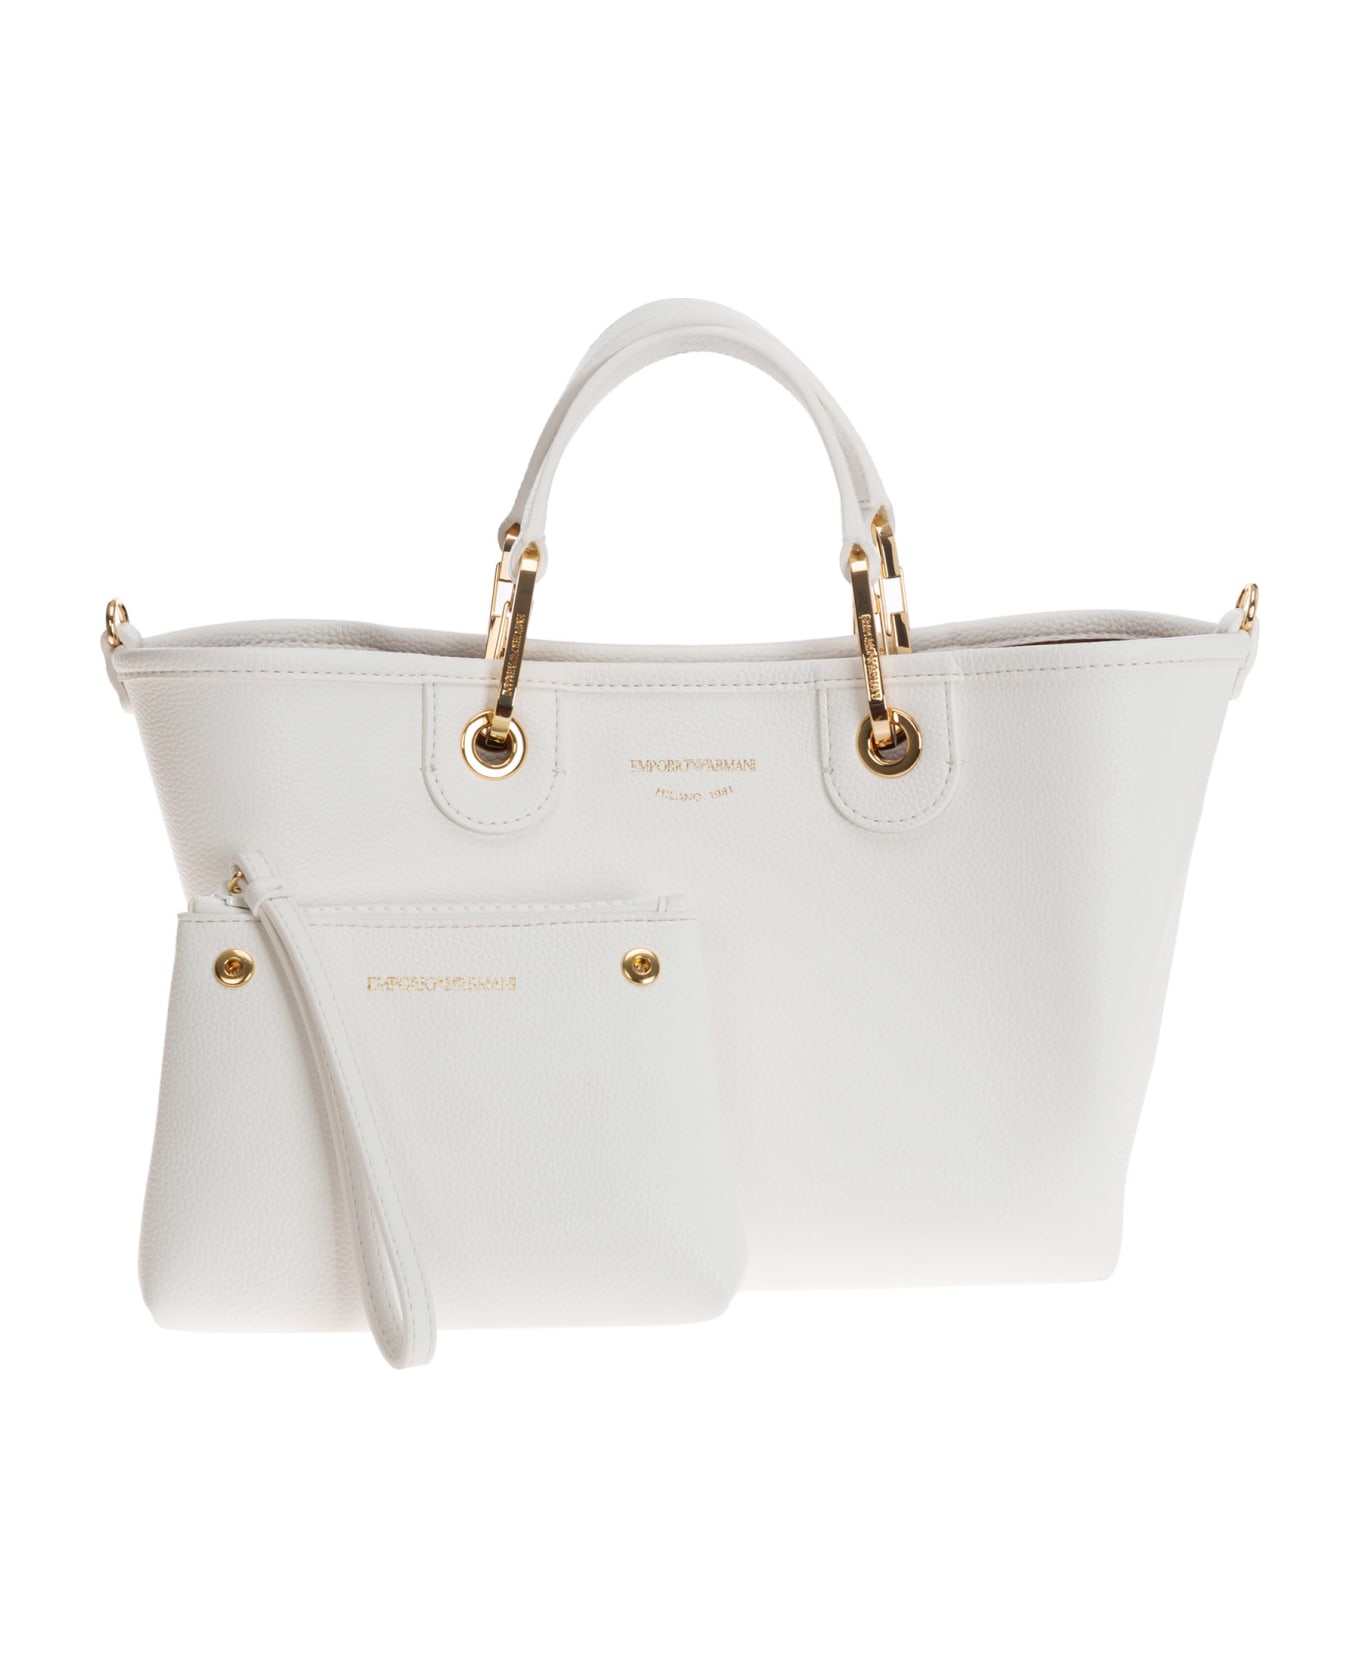 Emporio Armani Myea Small Small Handbag - White トートバッグ